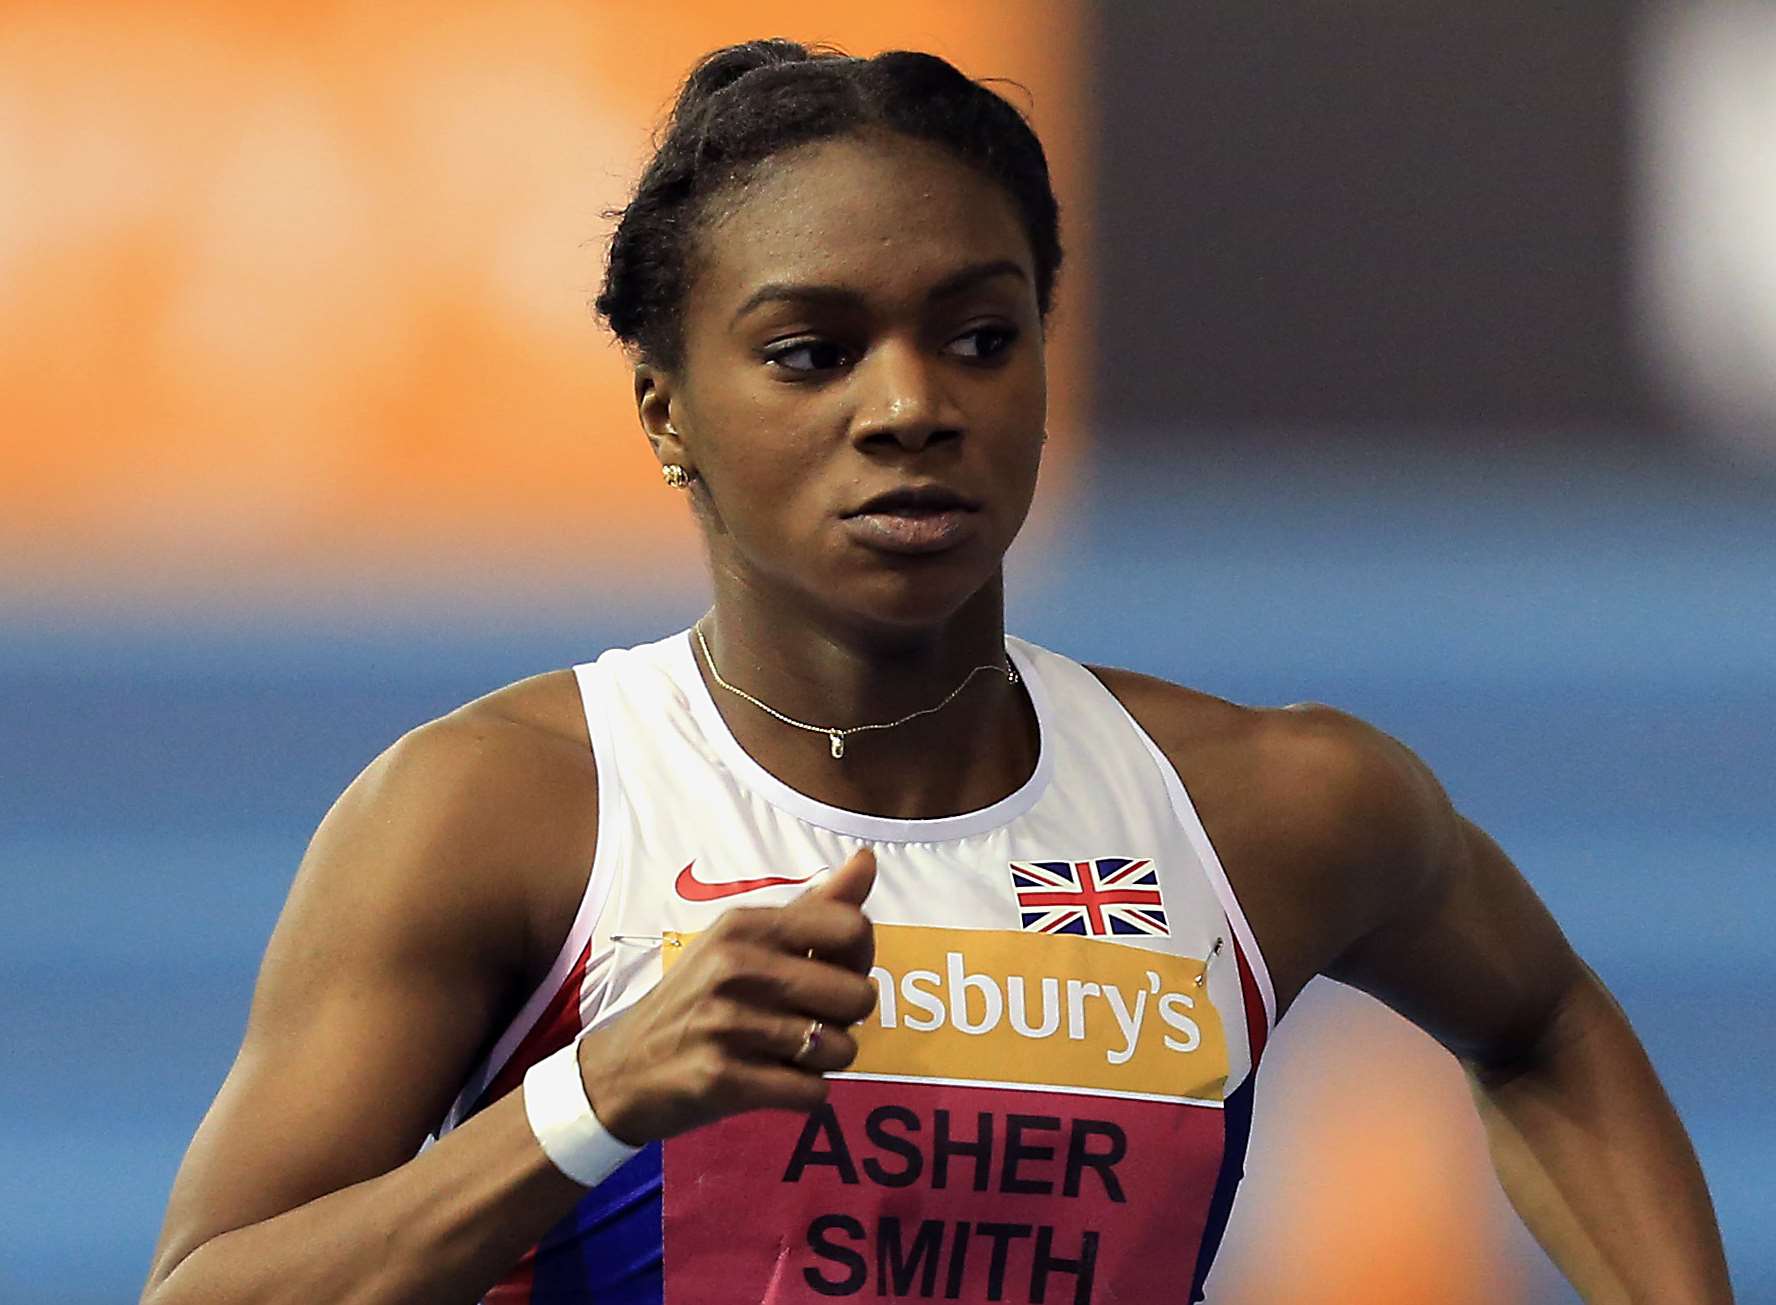 Dina Asher-Smith broke the British 200m record at the World Athletics Championships